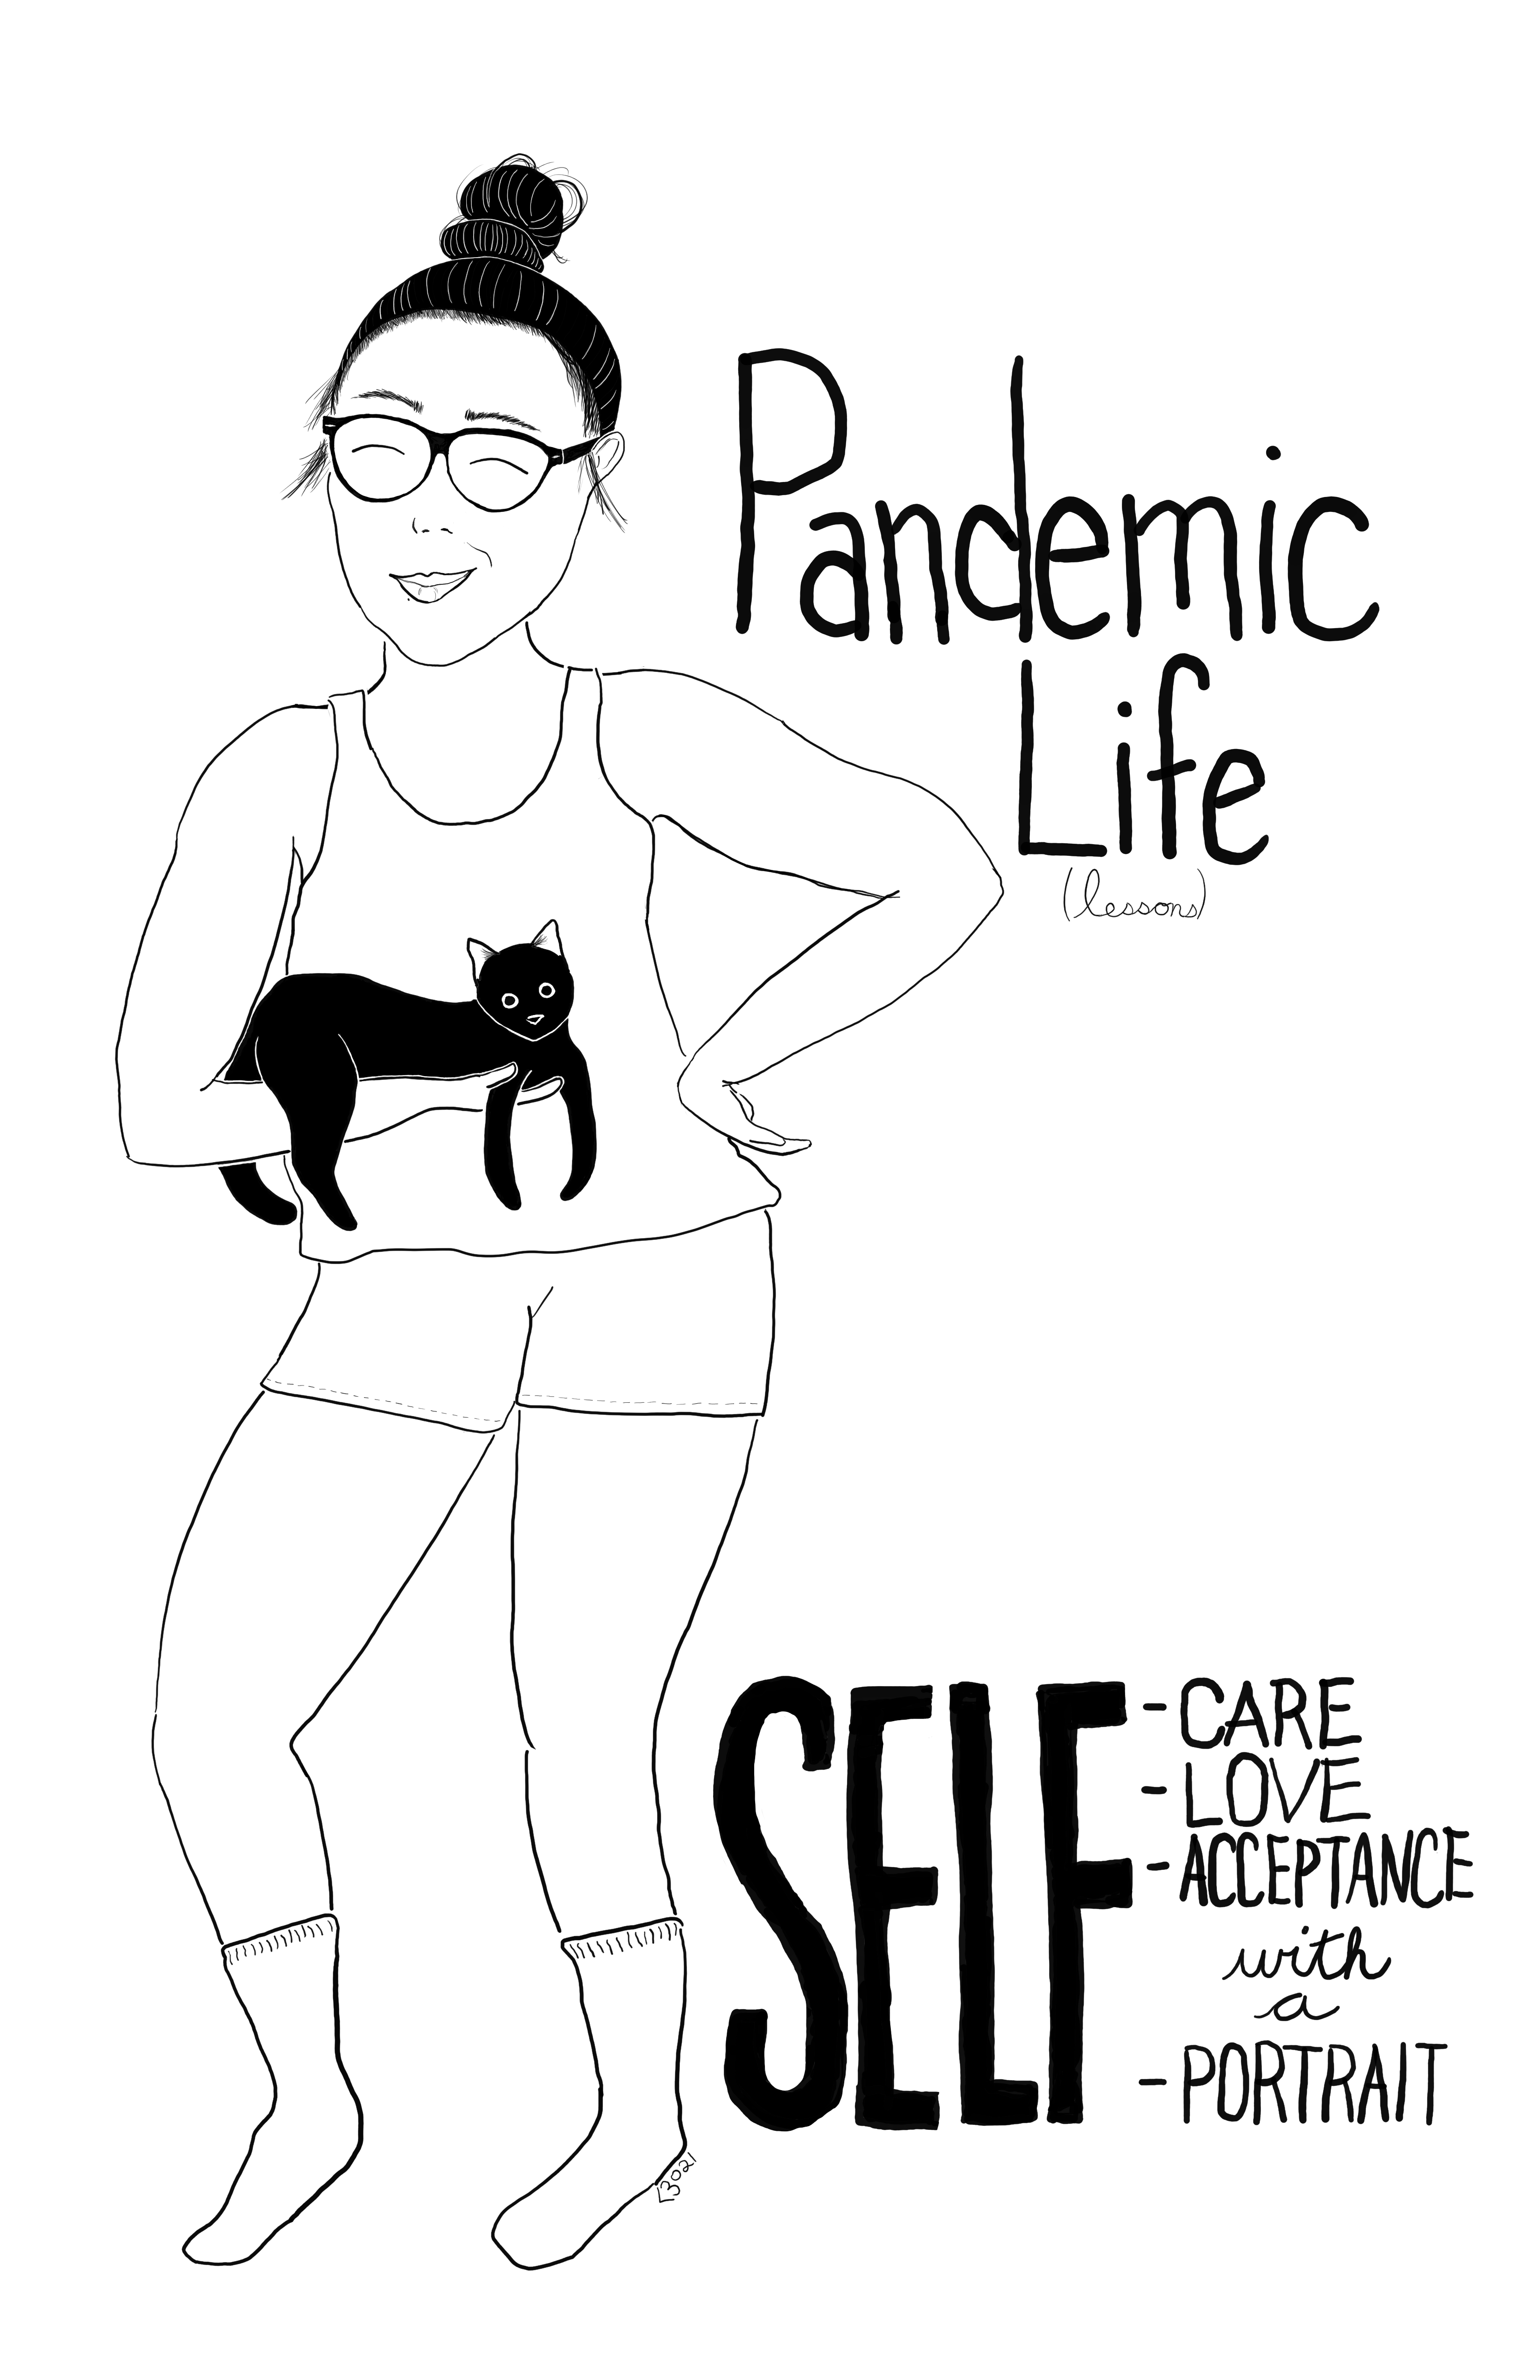 Self-Care, Self-Love, Self-Acceptance with a Self-Portrait